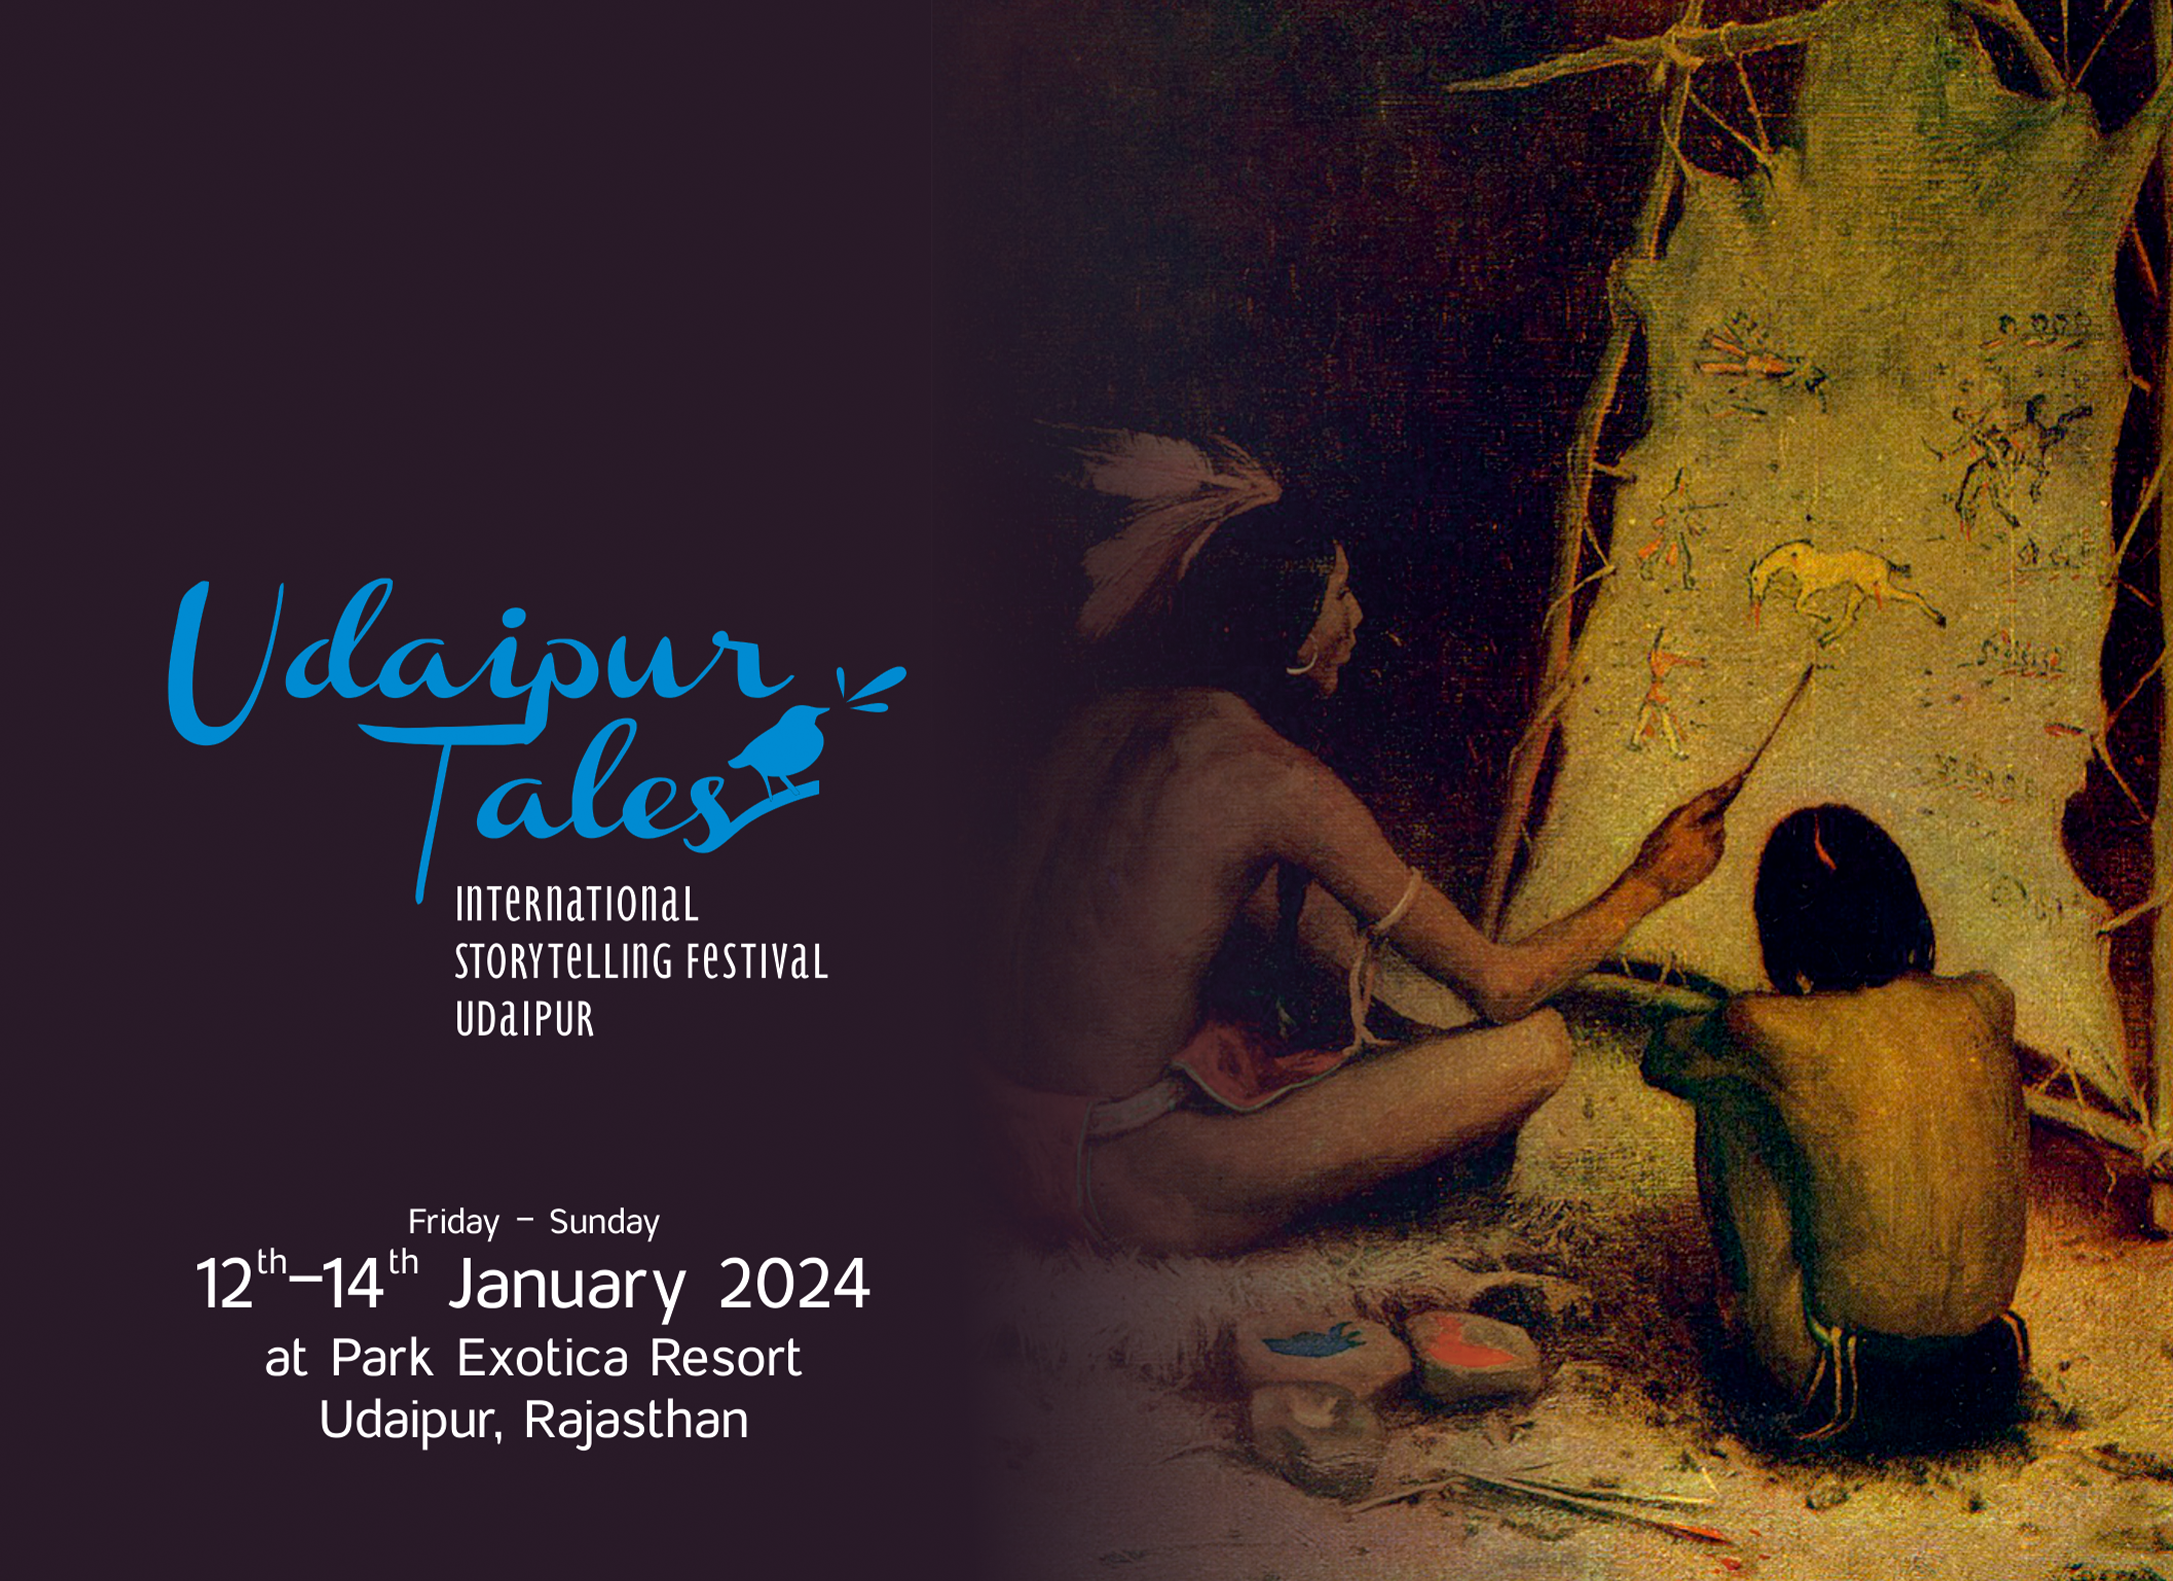 Udaipur Tales - International Storytelling Festival